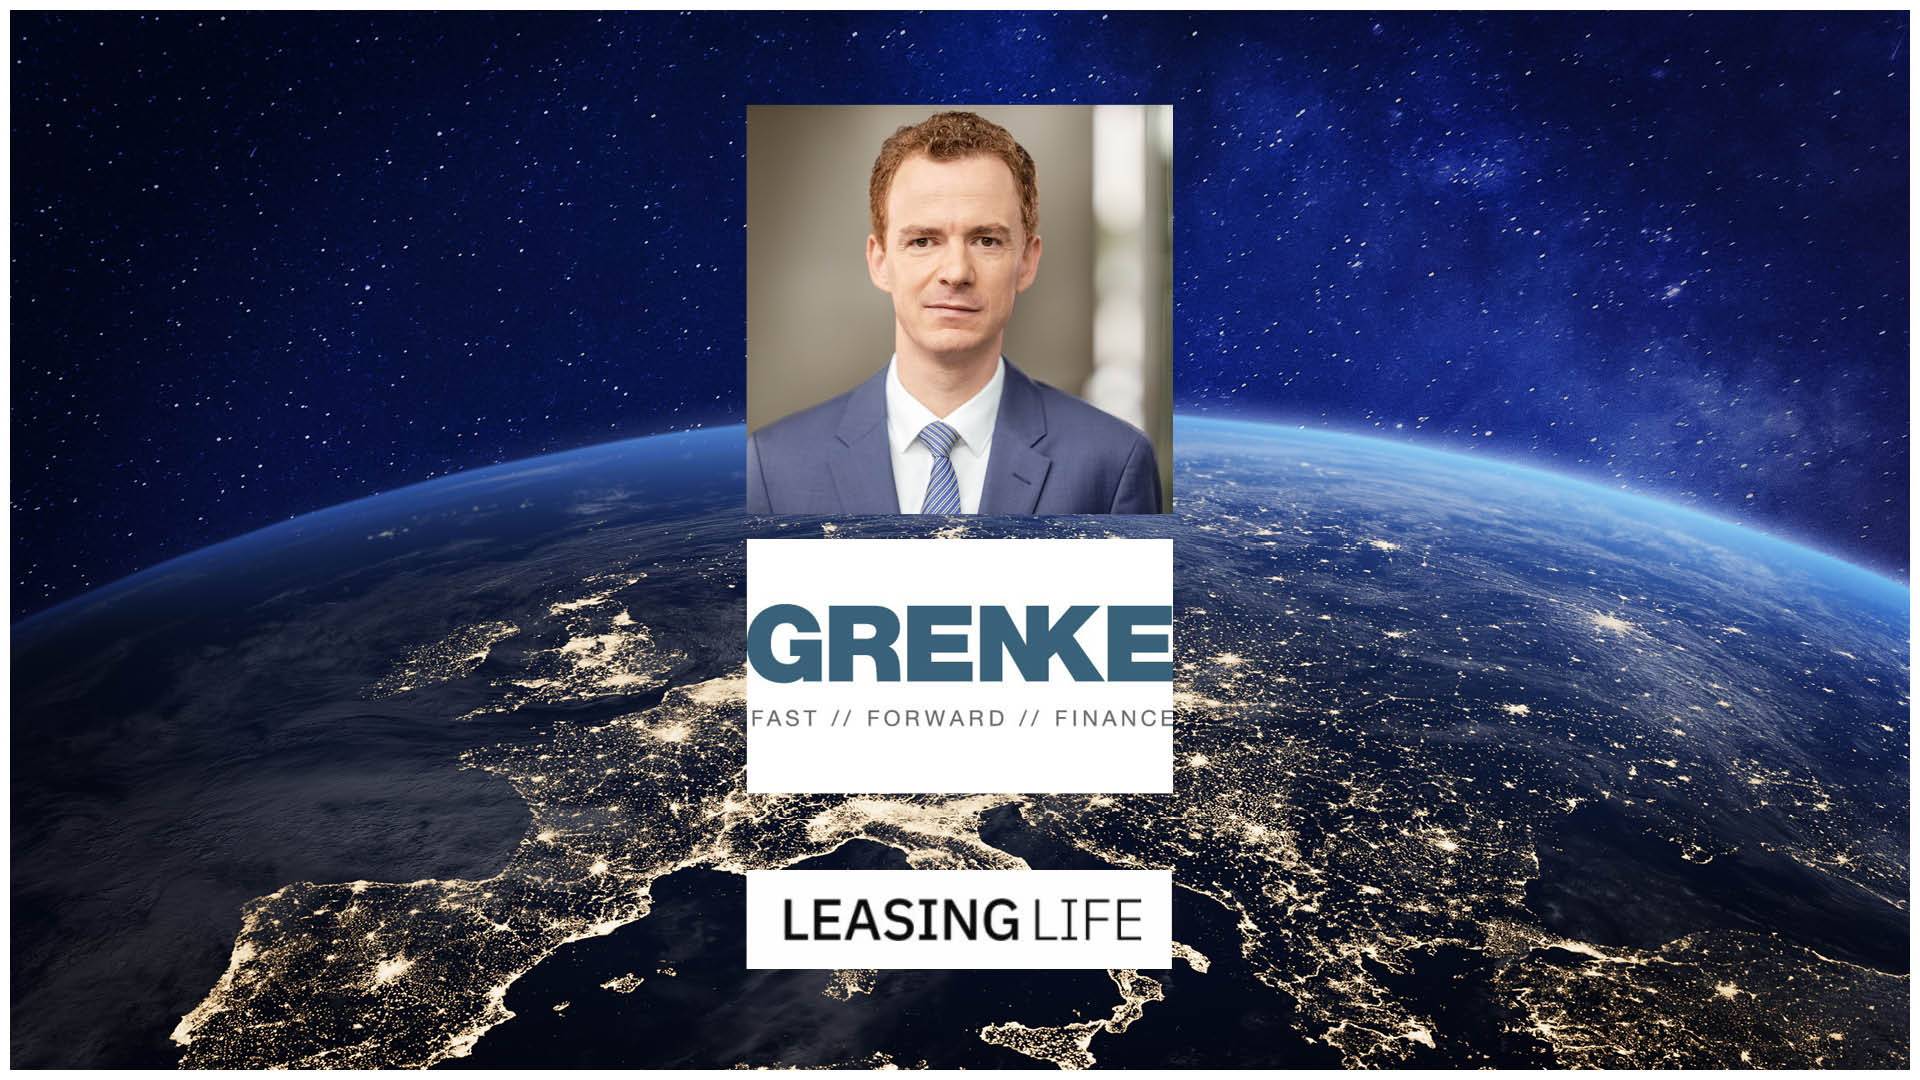 Grenke achieves €1.7bn in new leasing business in 2021